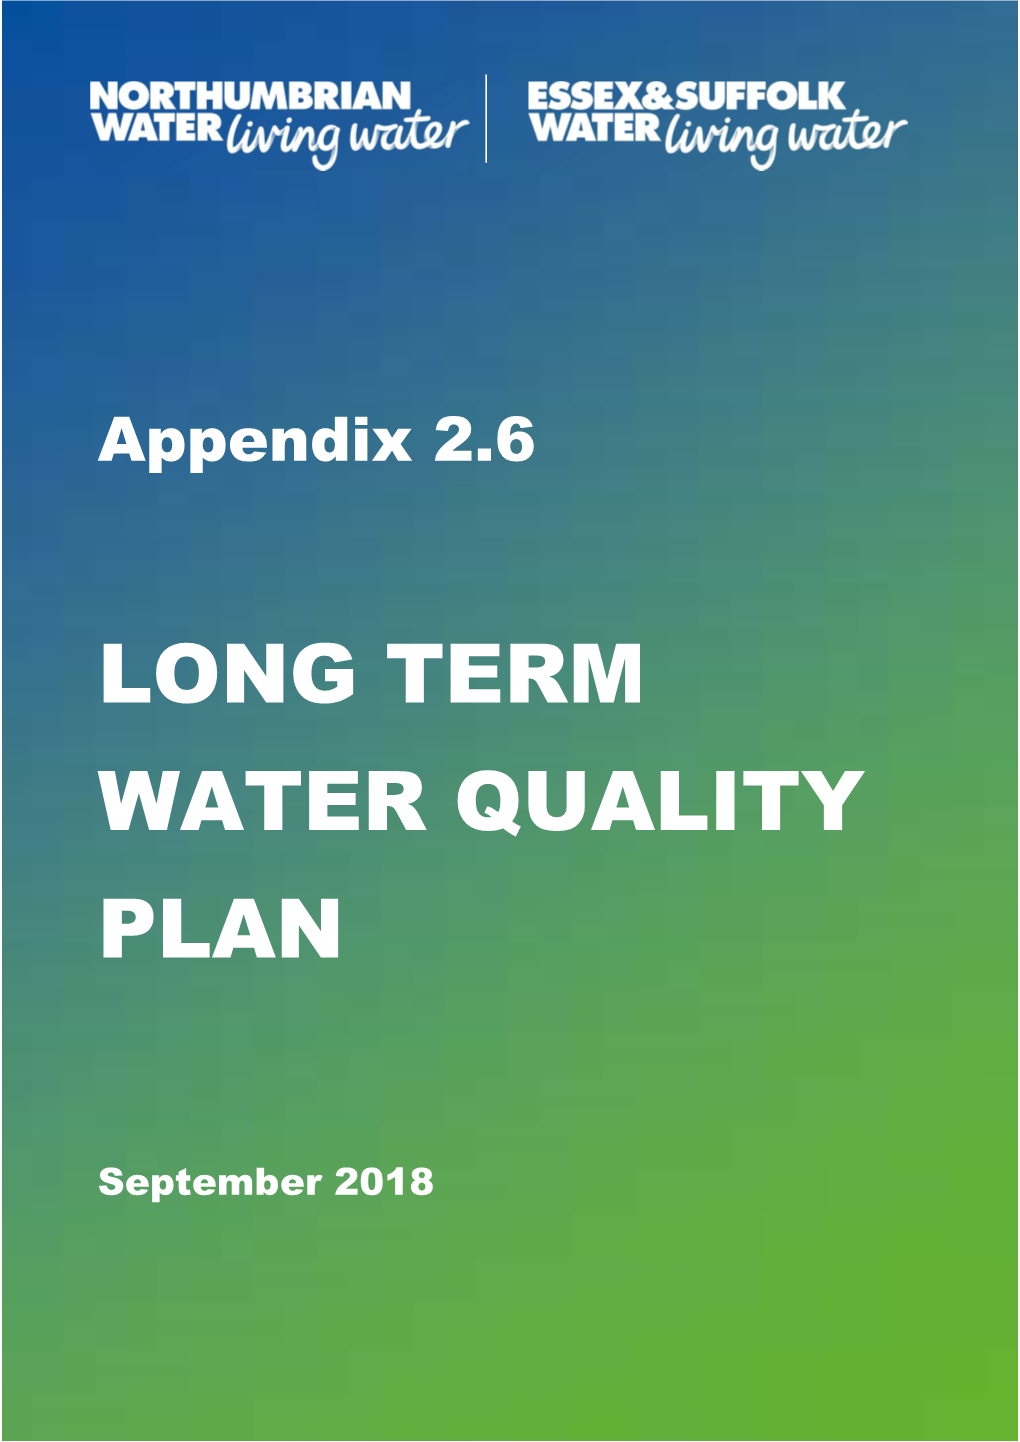 2.6 Long Term Water Quality Plan